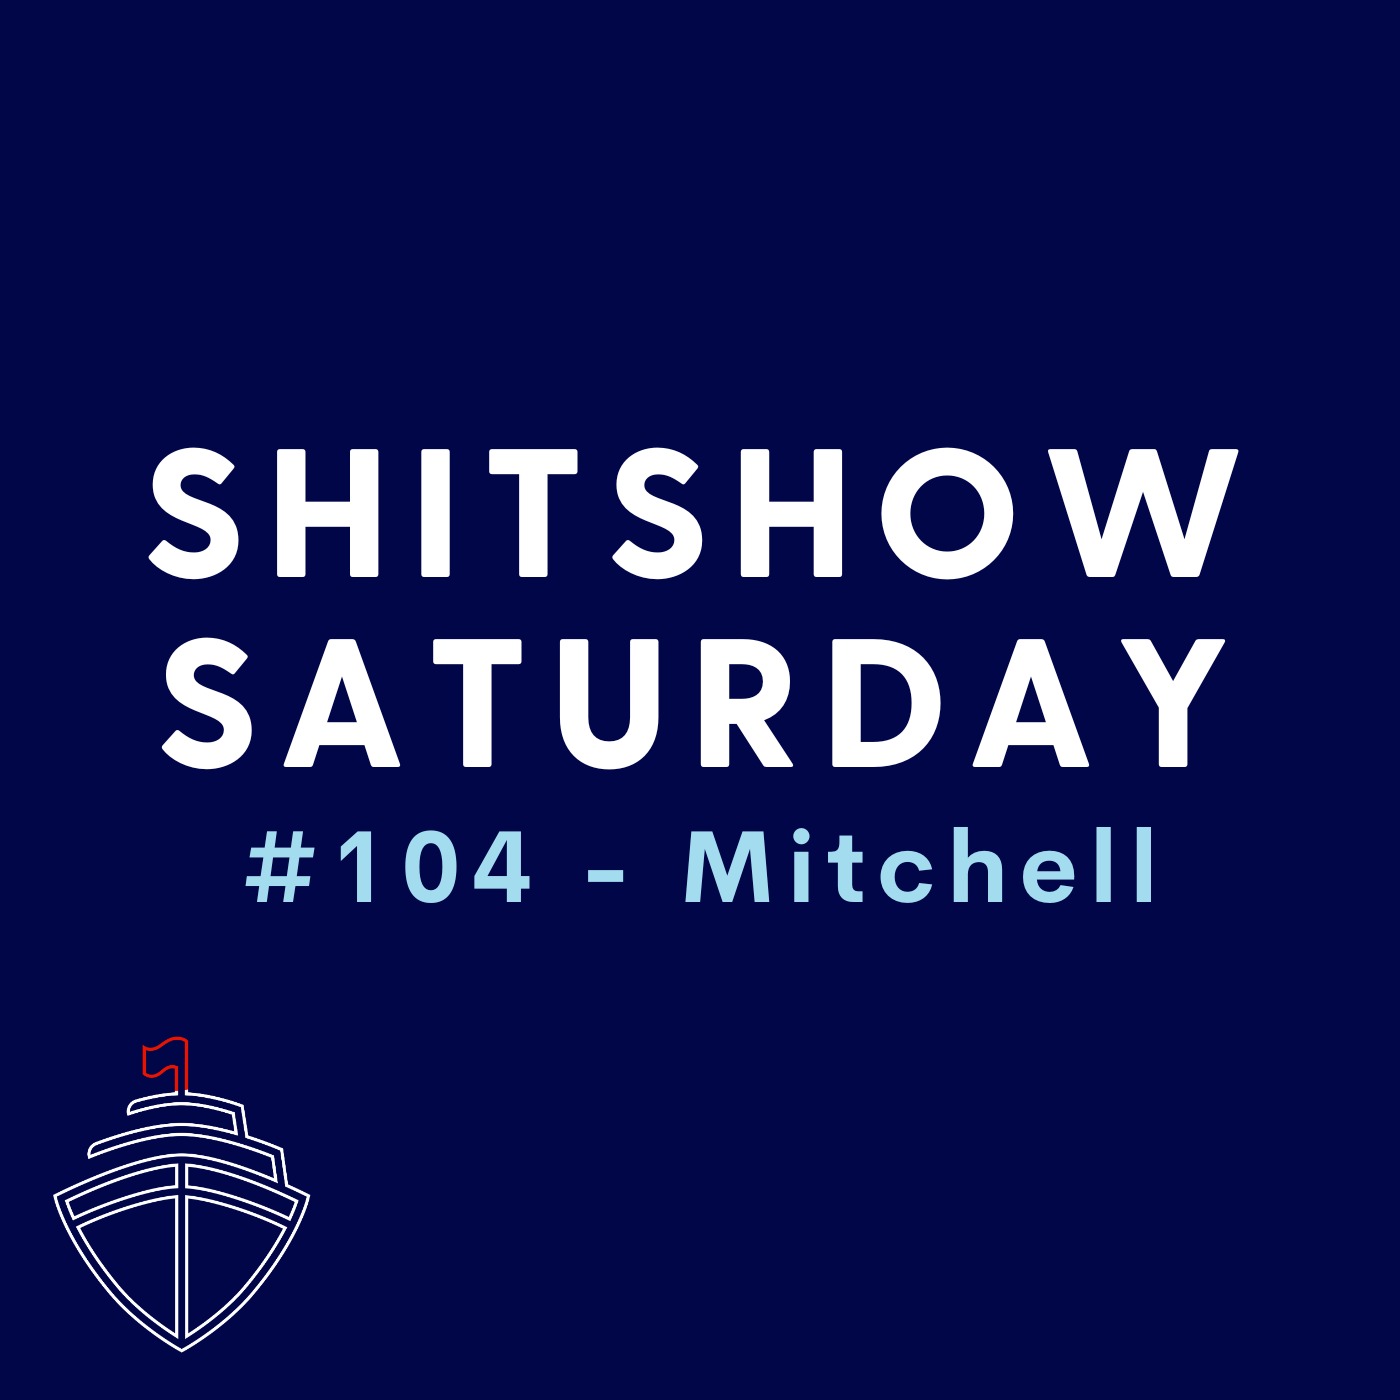 SHITSHOW SATURDAY #104 - Mitchell